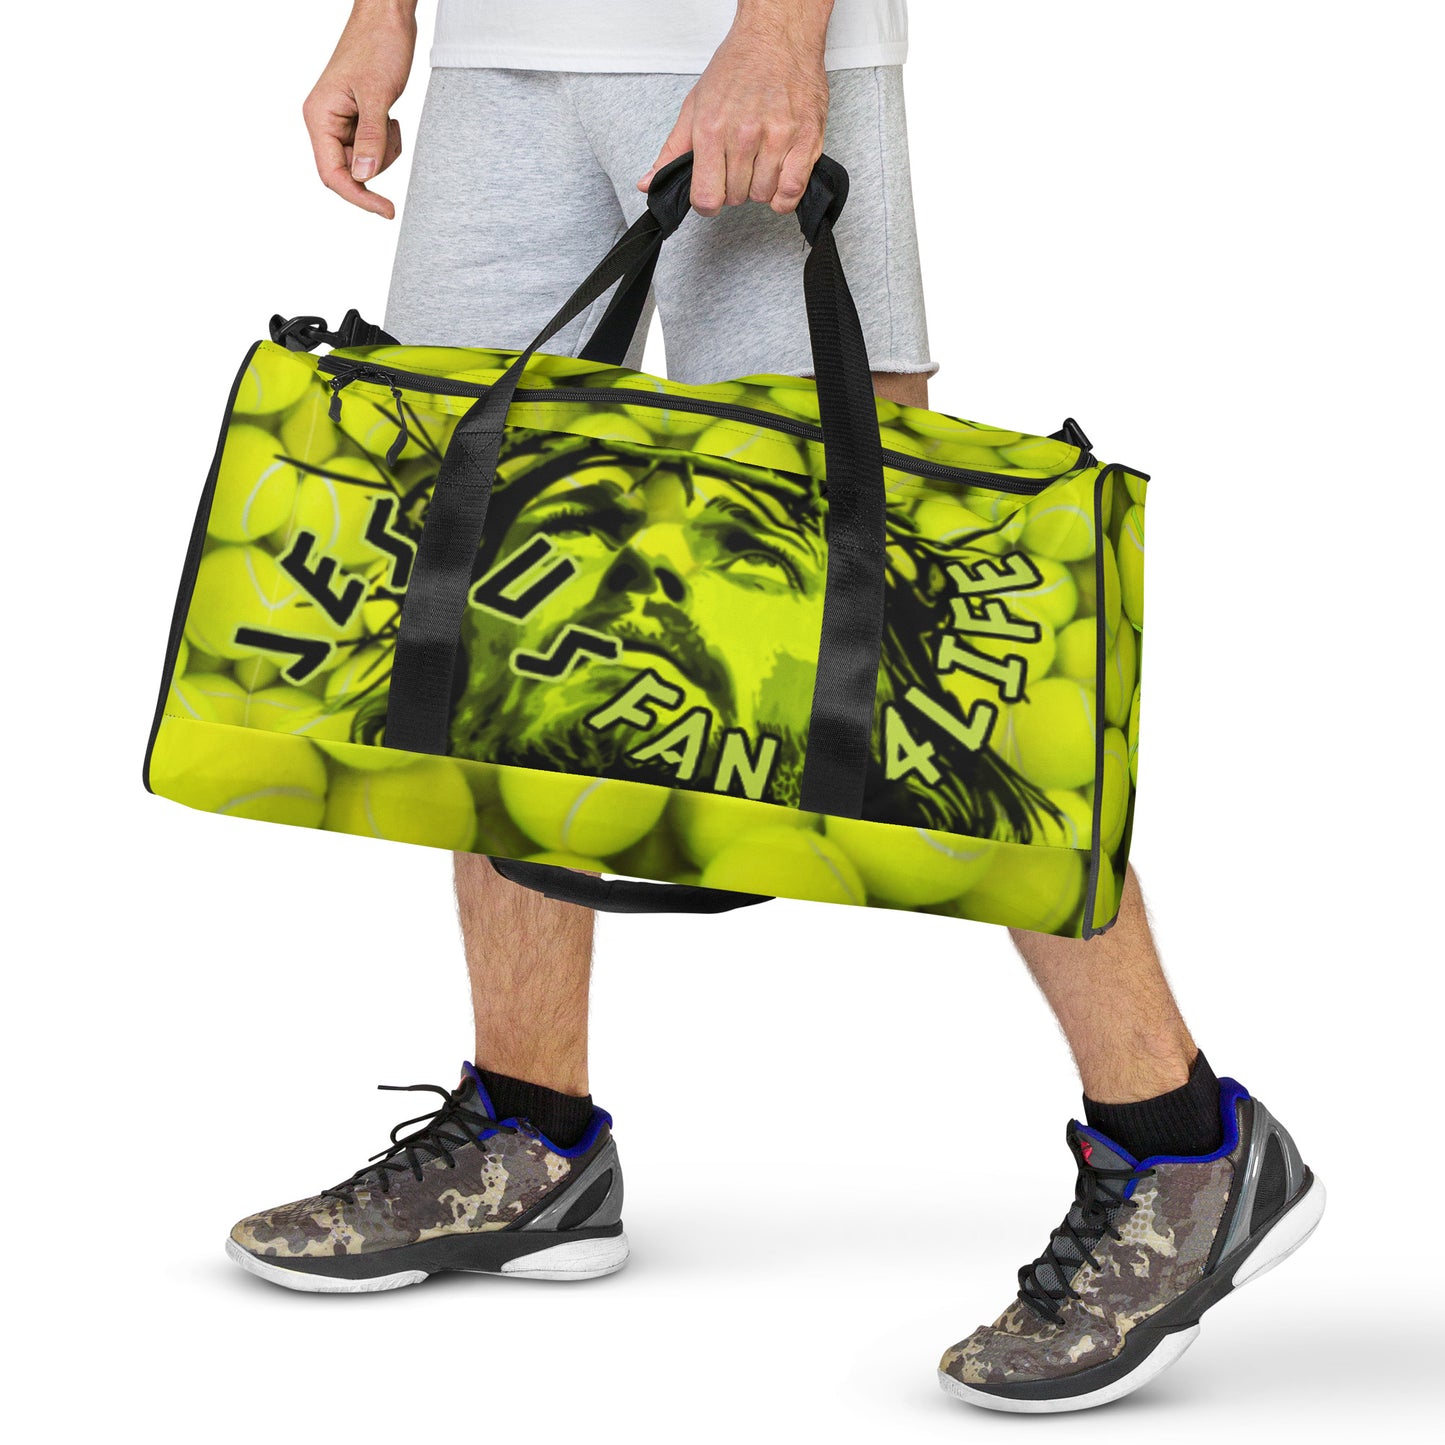 Jesus Fan 4Life- Tennis Duffle bag